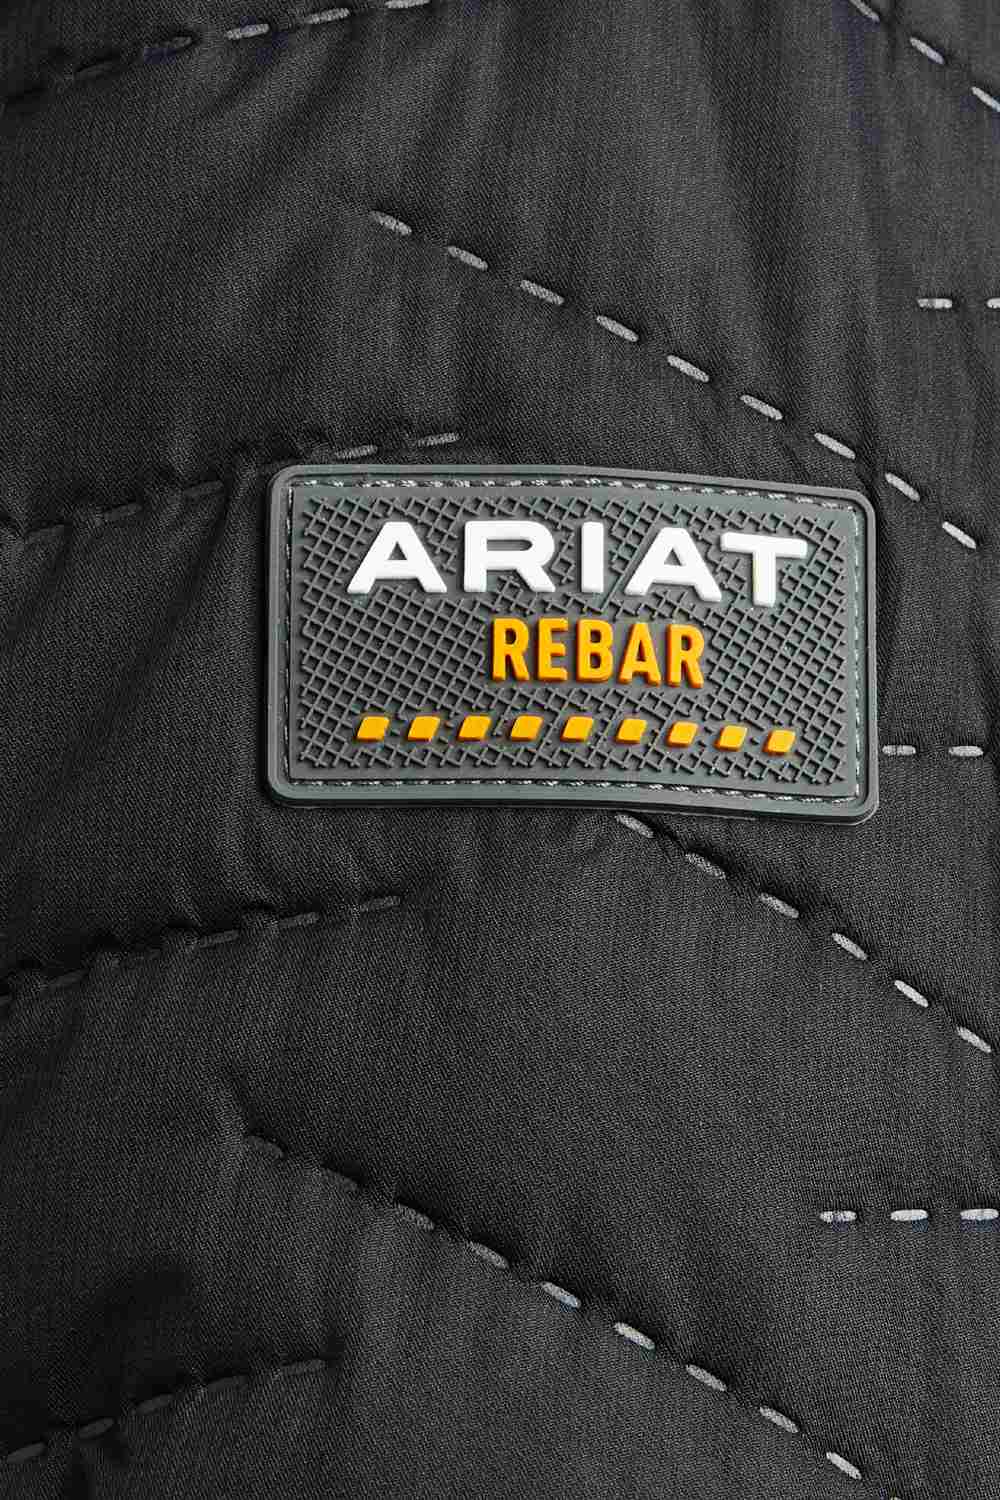 Ariat Rebar Womens Cloud 9 Insulated Jacket